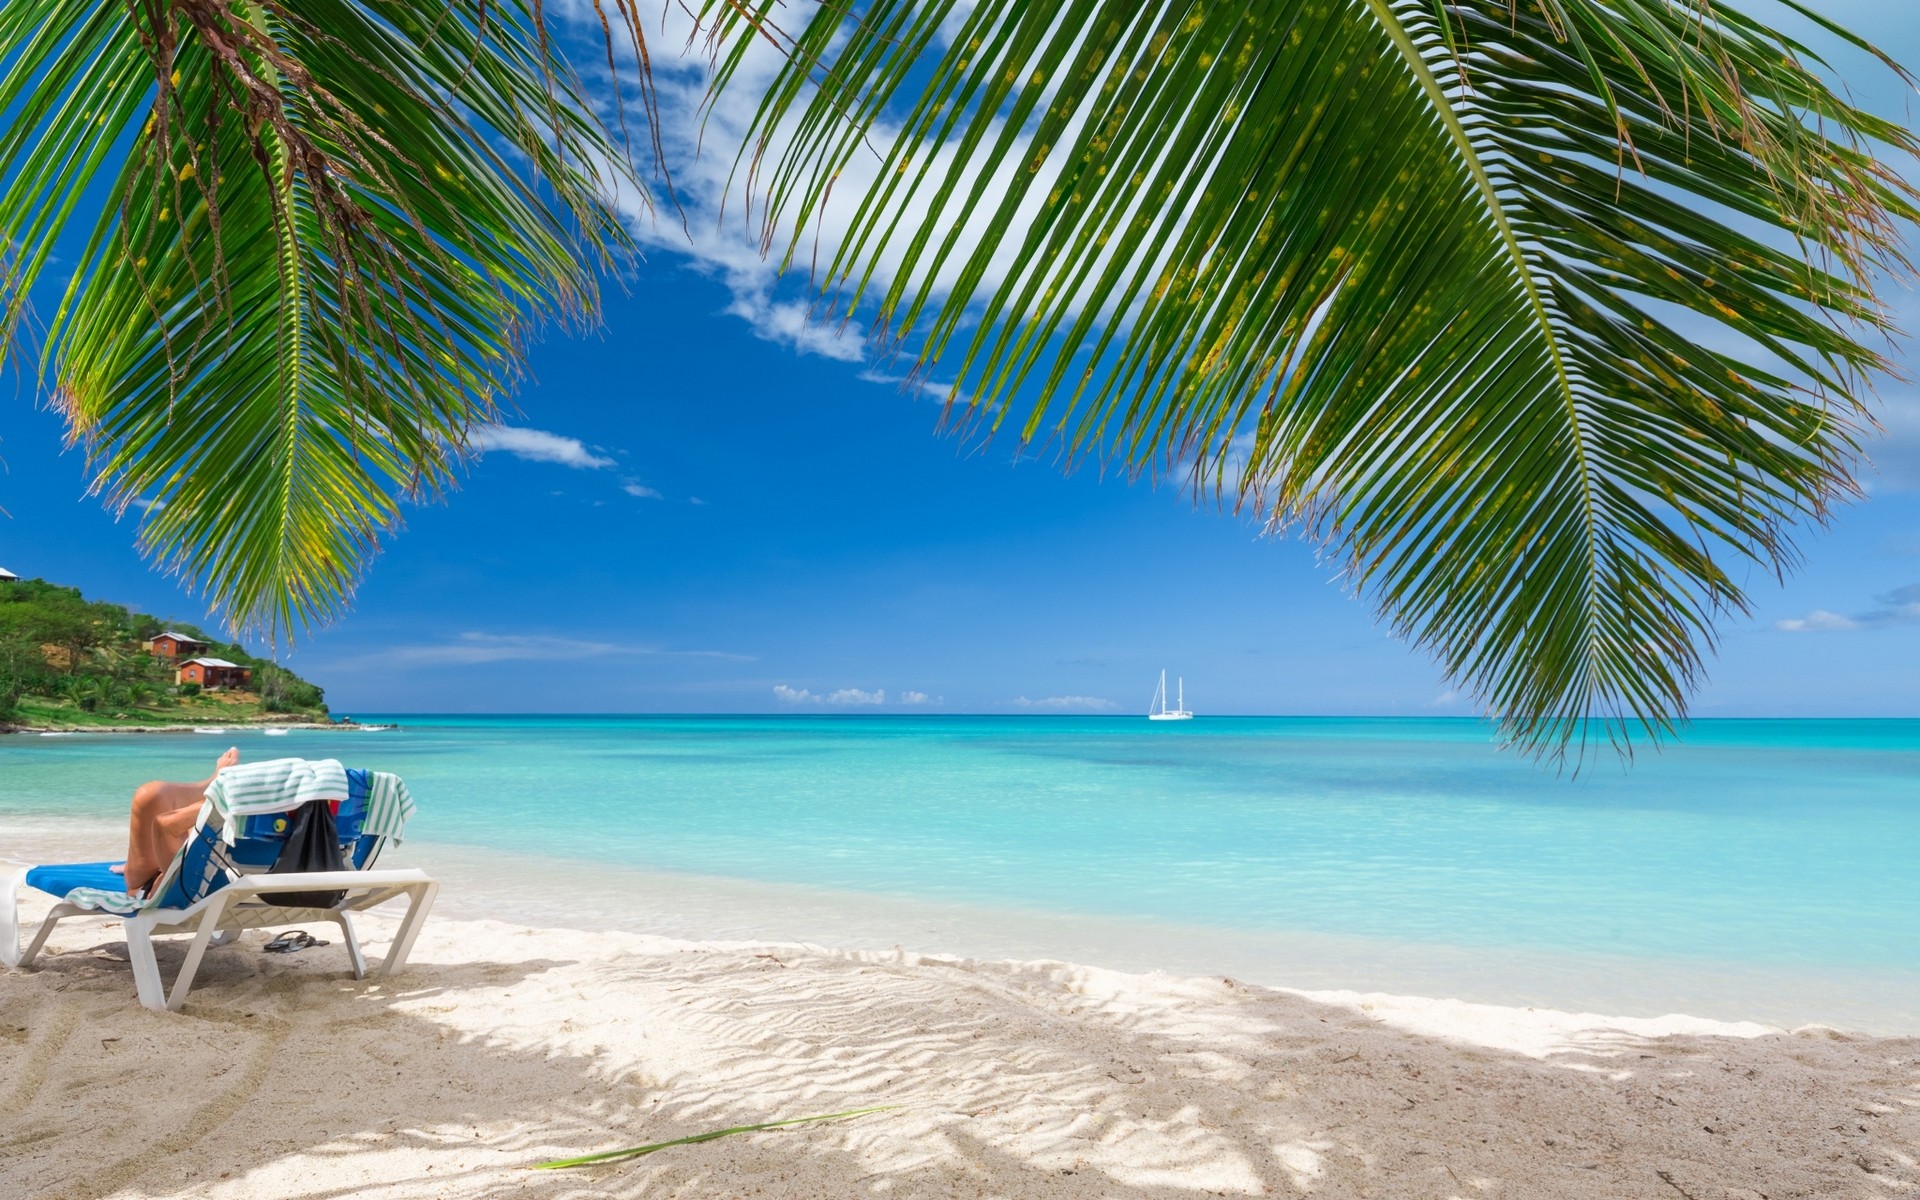 Beach, Summer, Tropical, Sea, Nature, Landscape, Caribbean, Palm Trees